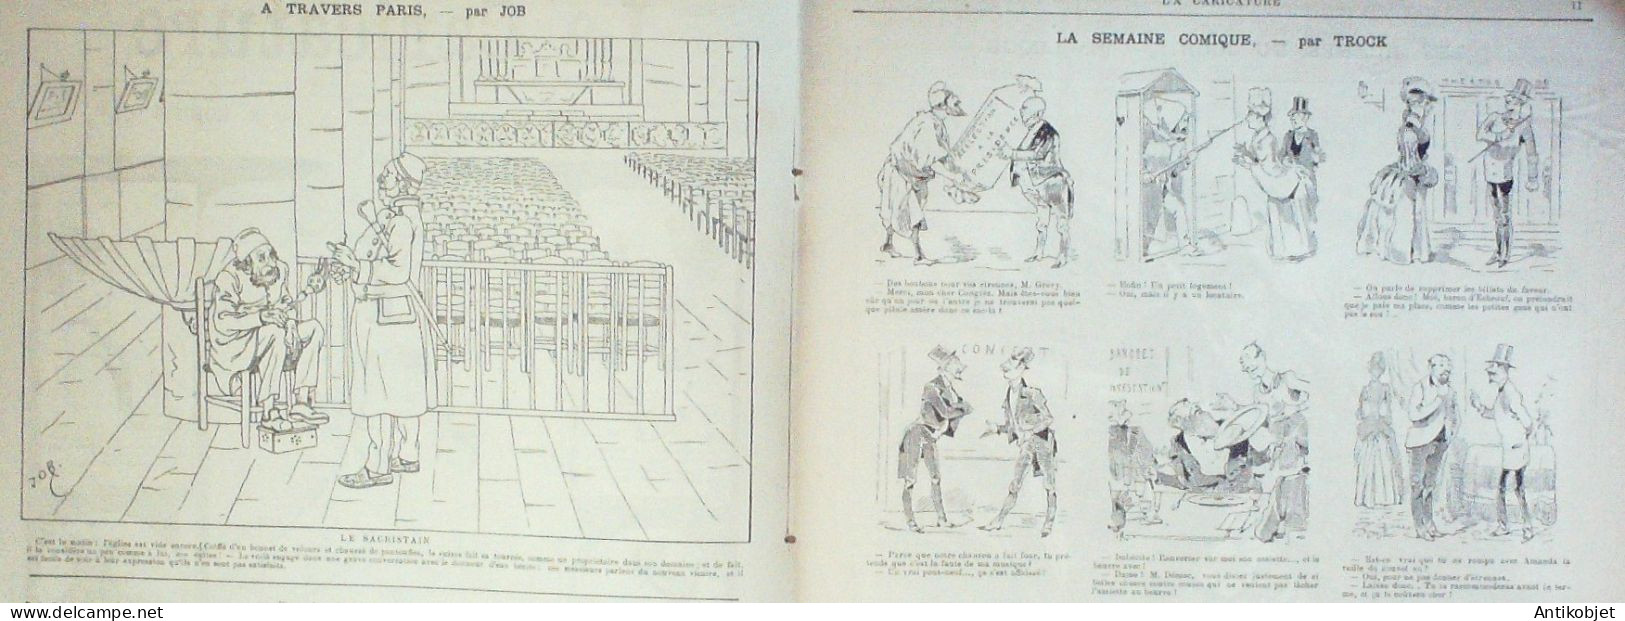 La Caricature 1886 N°315 Calendrier Universel Robida Clémenceau Par Luque Sapho Sorel Job Loys - Revistas - Antes 1900